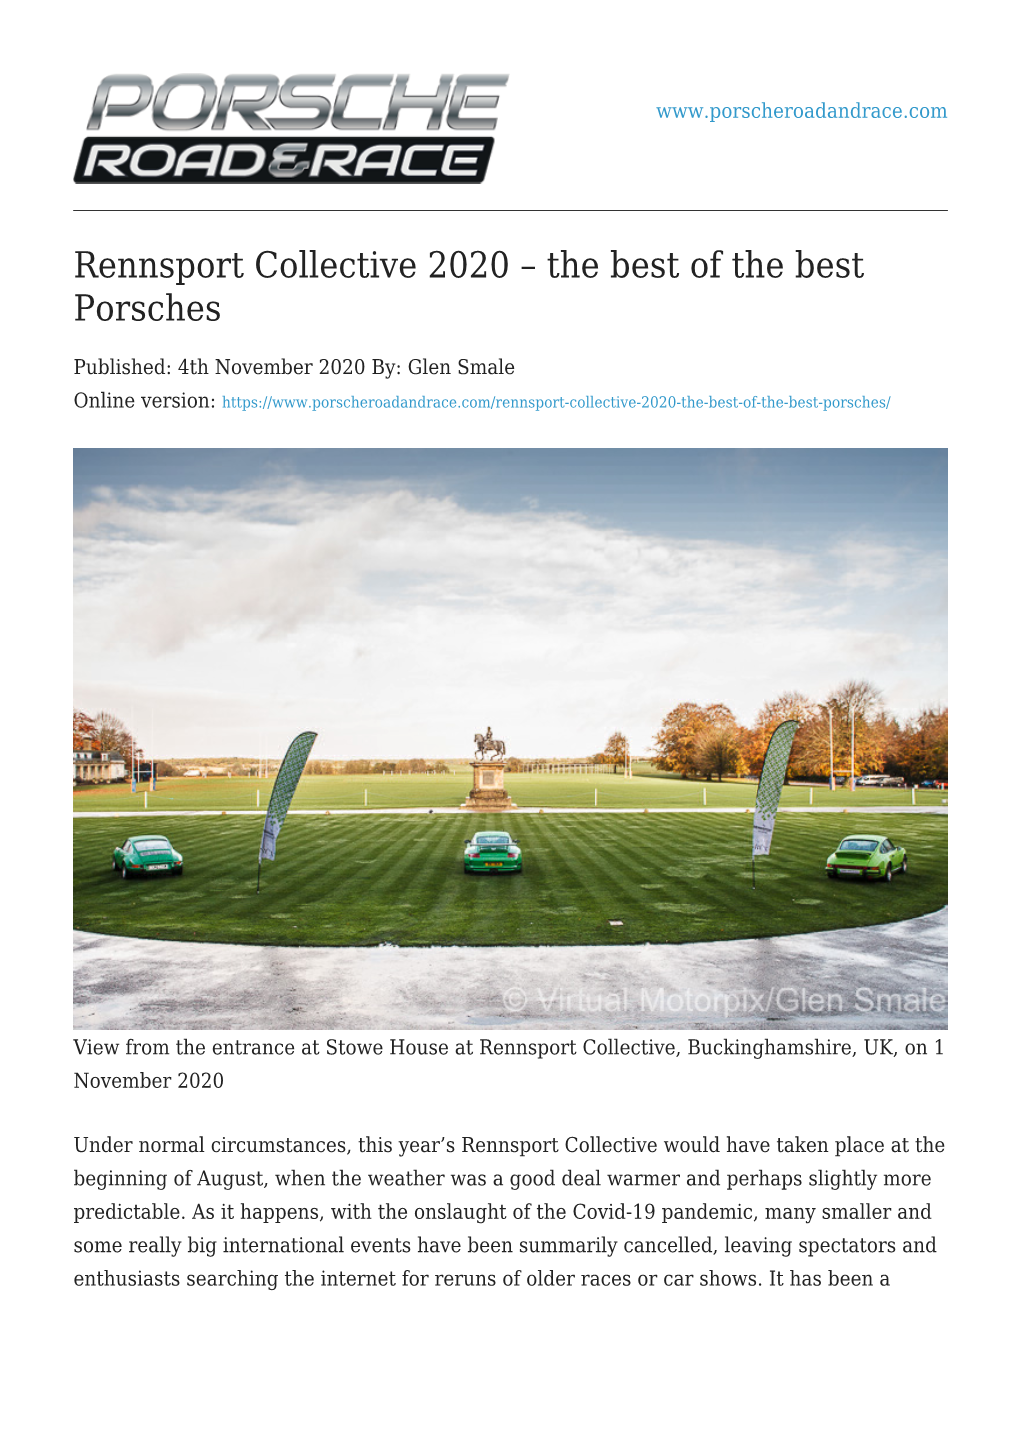 Rennsport Collective 2020 – the Best of the Best Porsches